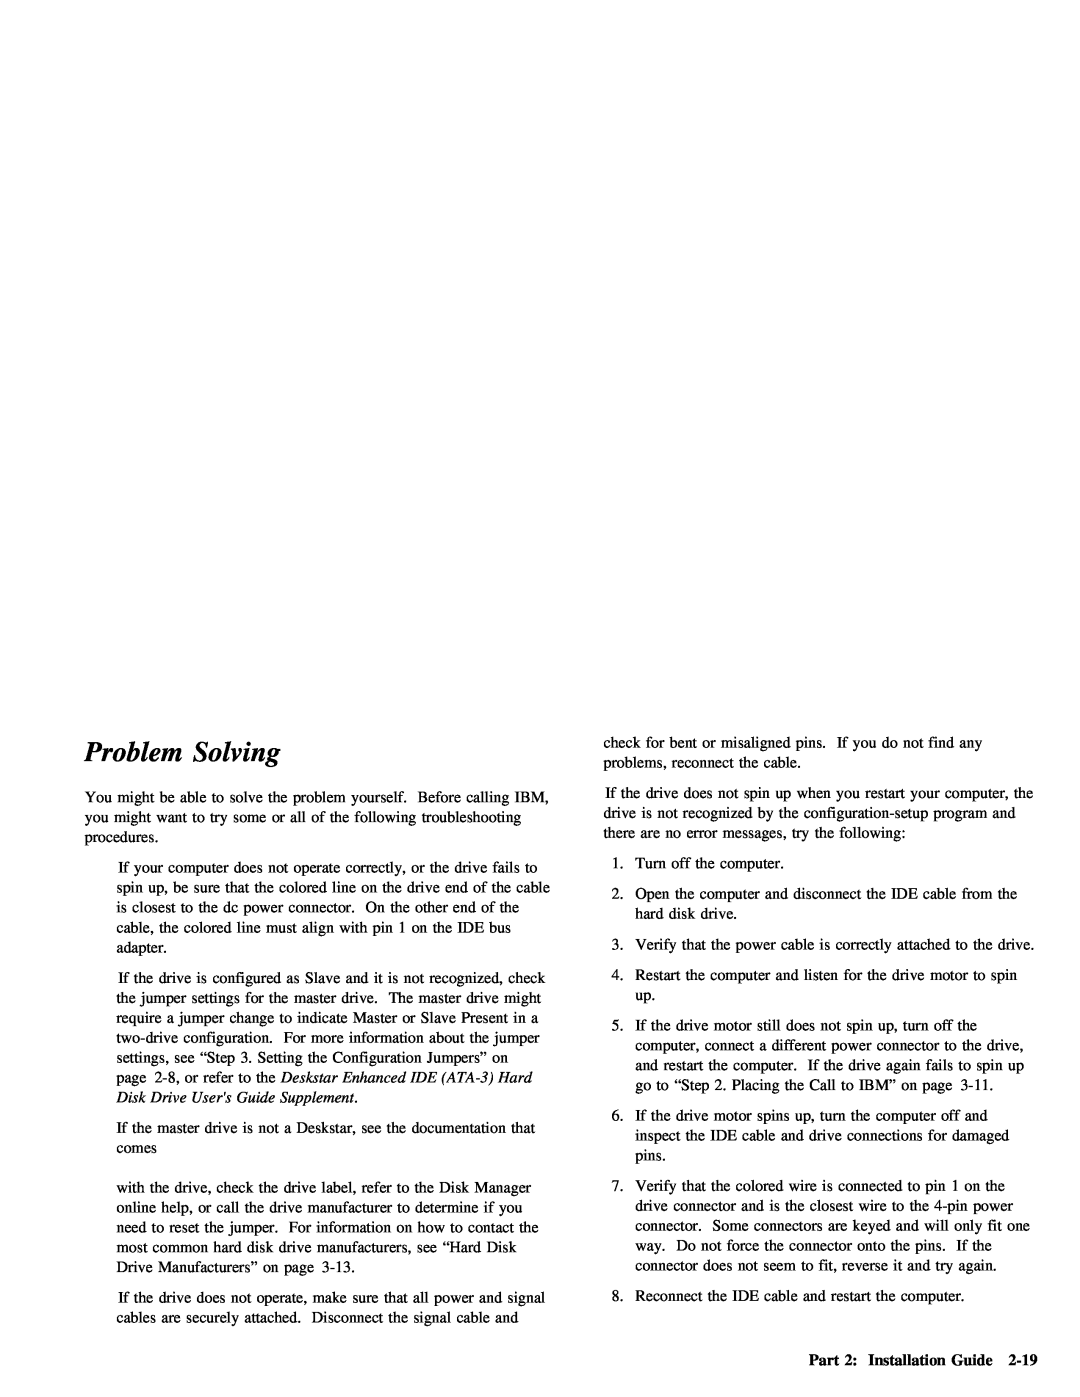 IBM ATA-3 manual Solving, 2-19, Problem 